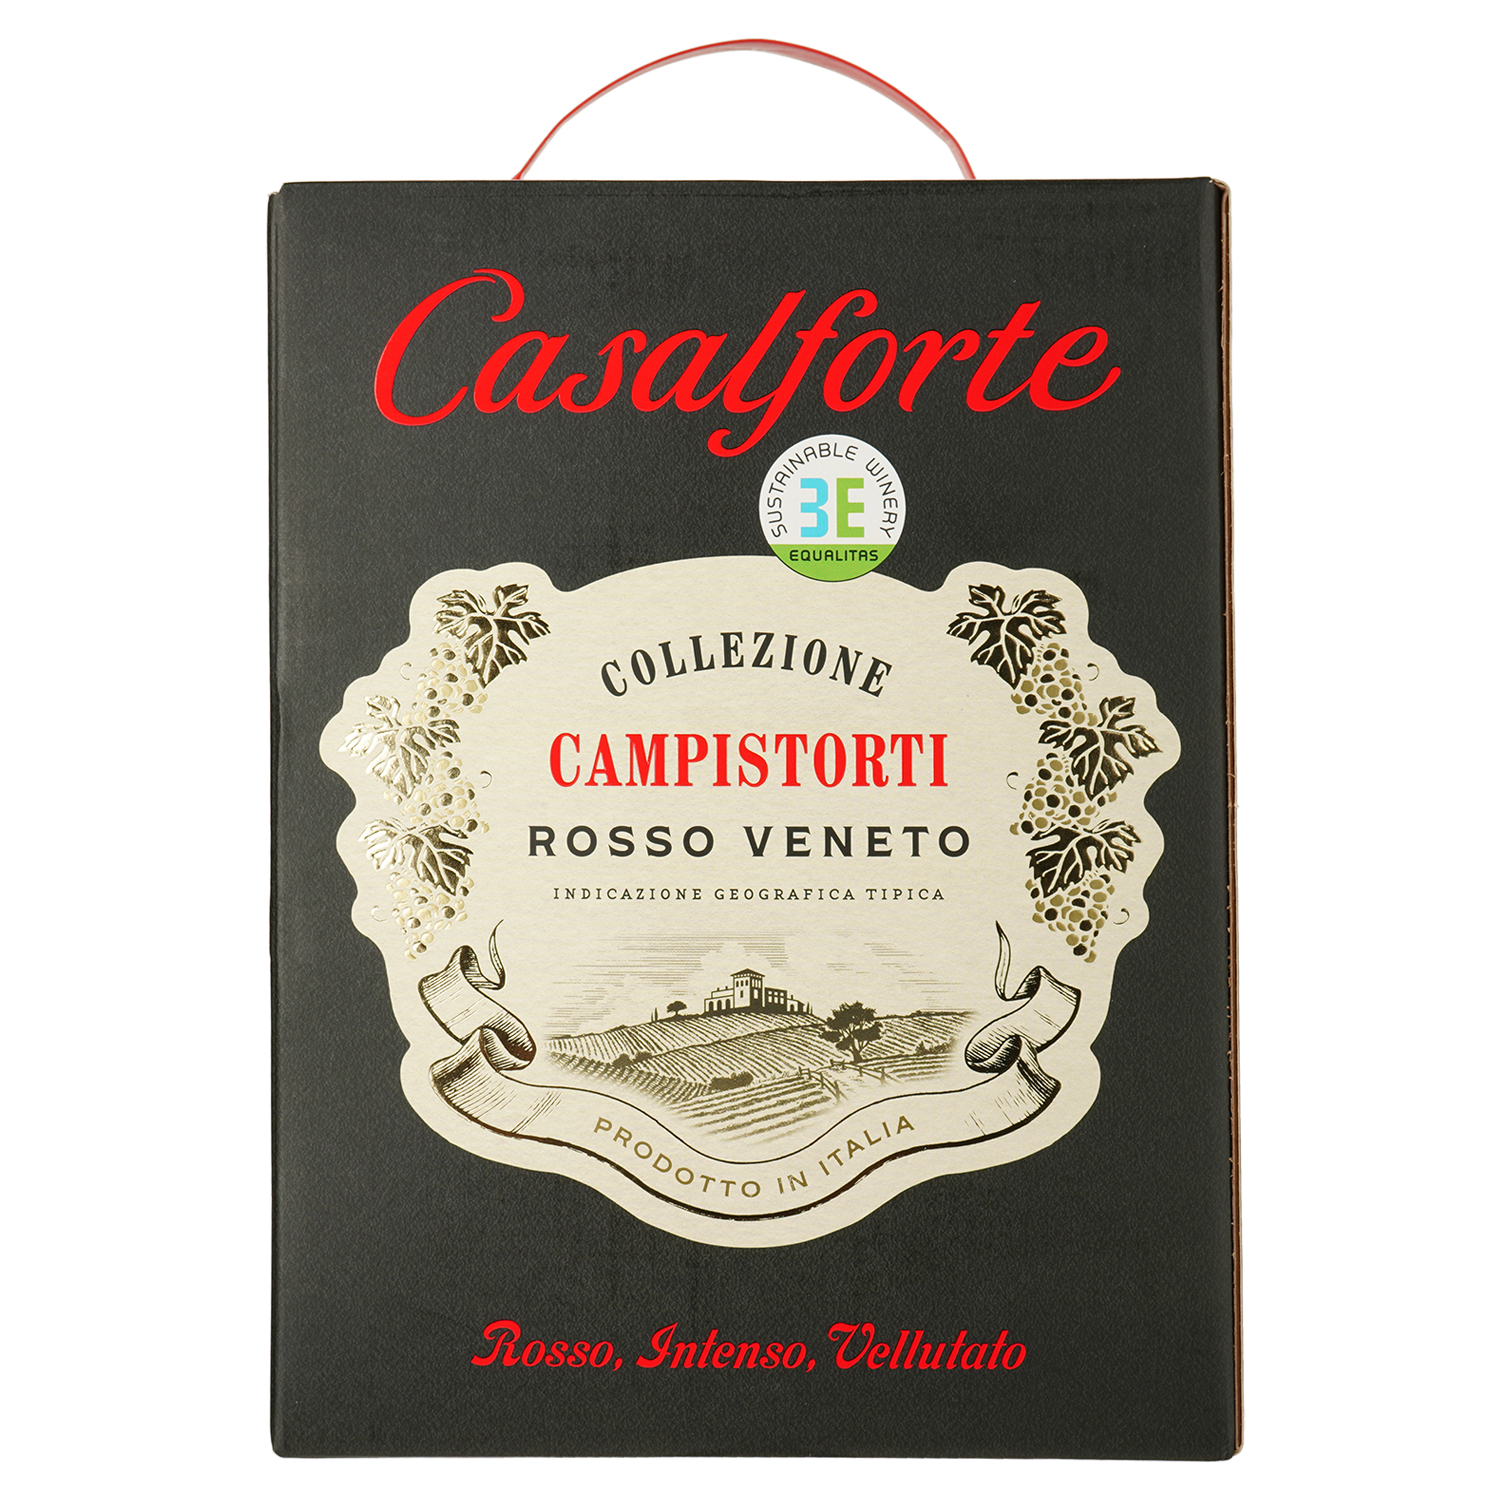 Вино Casalforte Collezione Campistorti Rosso Veneto IGT, красное, сухое, 3 л - фото 1